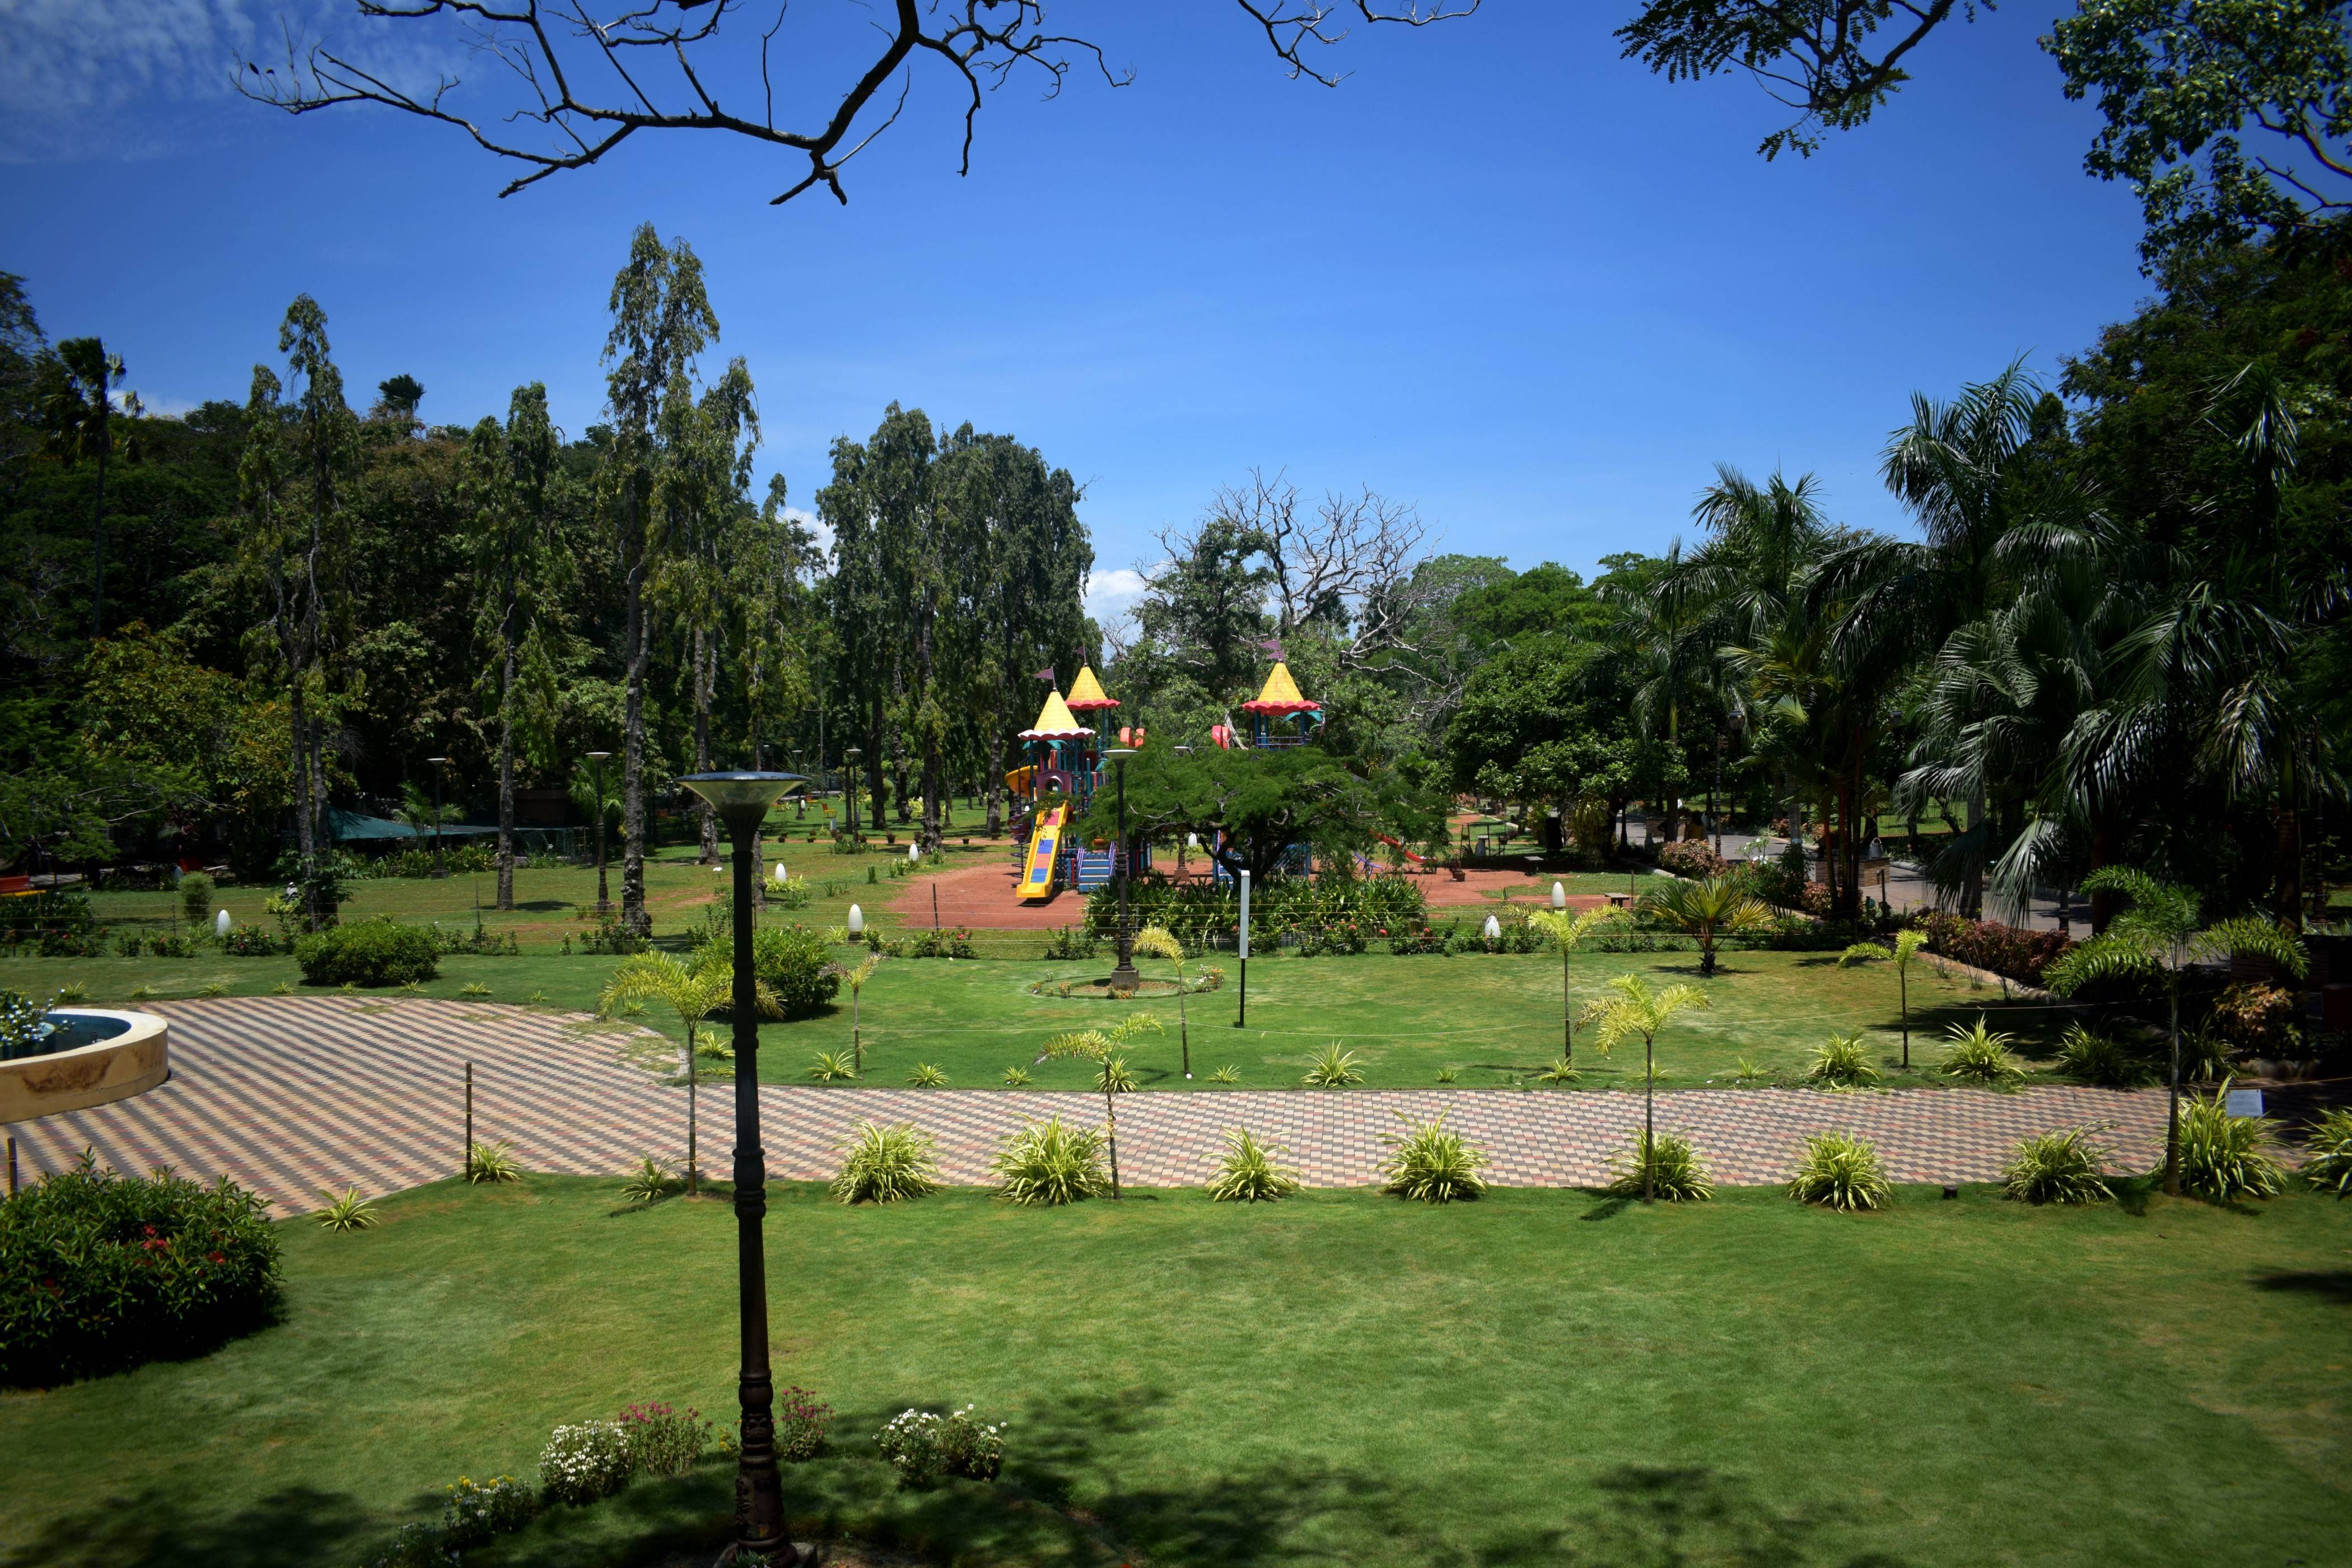 Kochi : Subash Chandra Bose Park